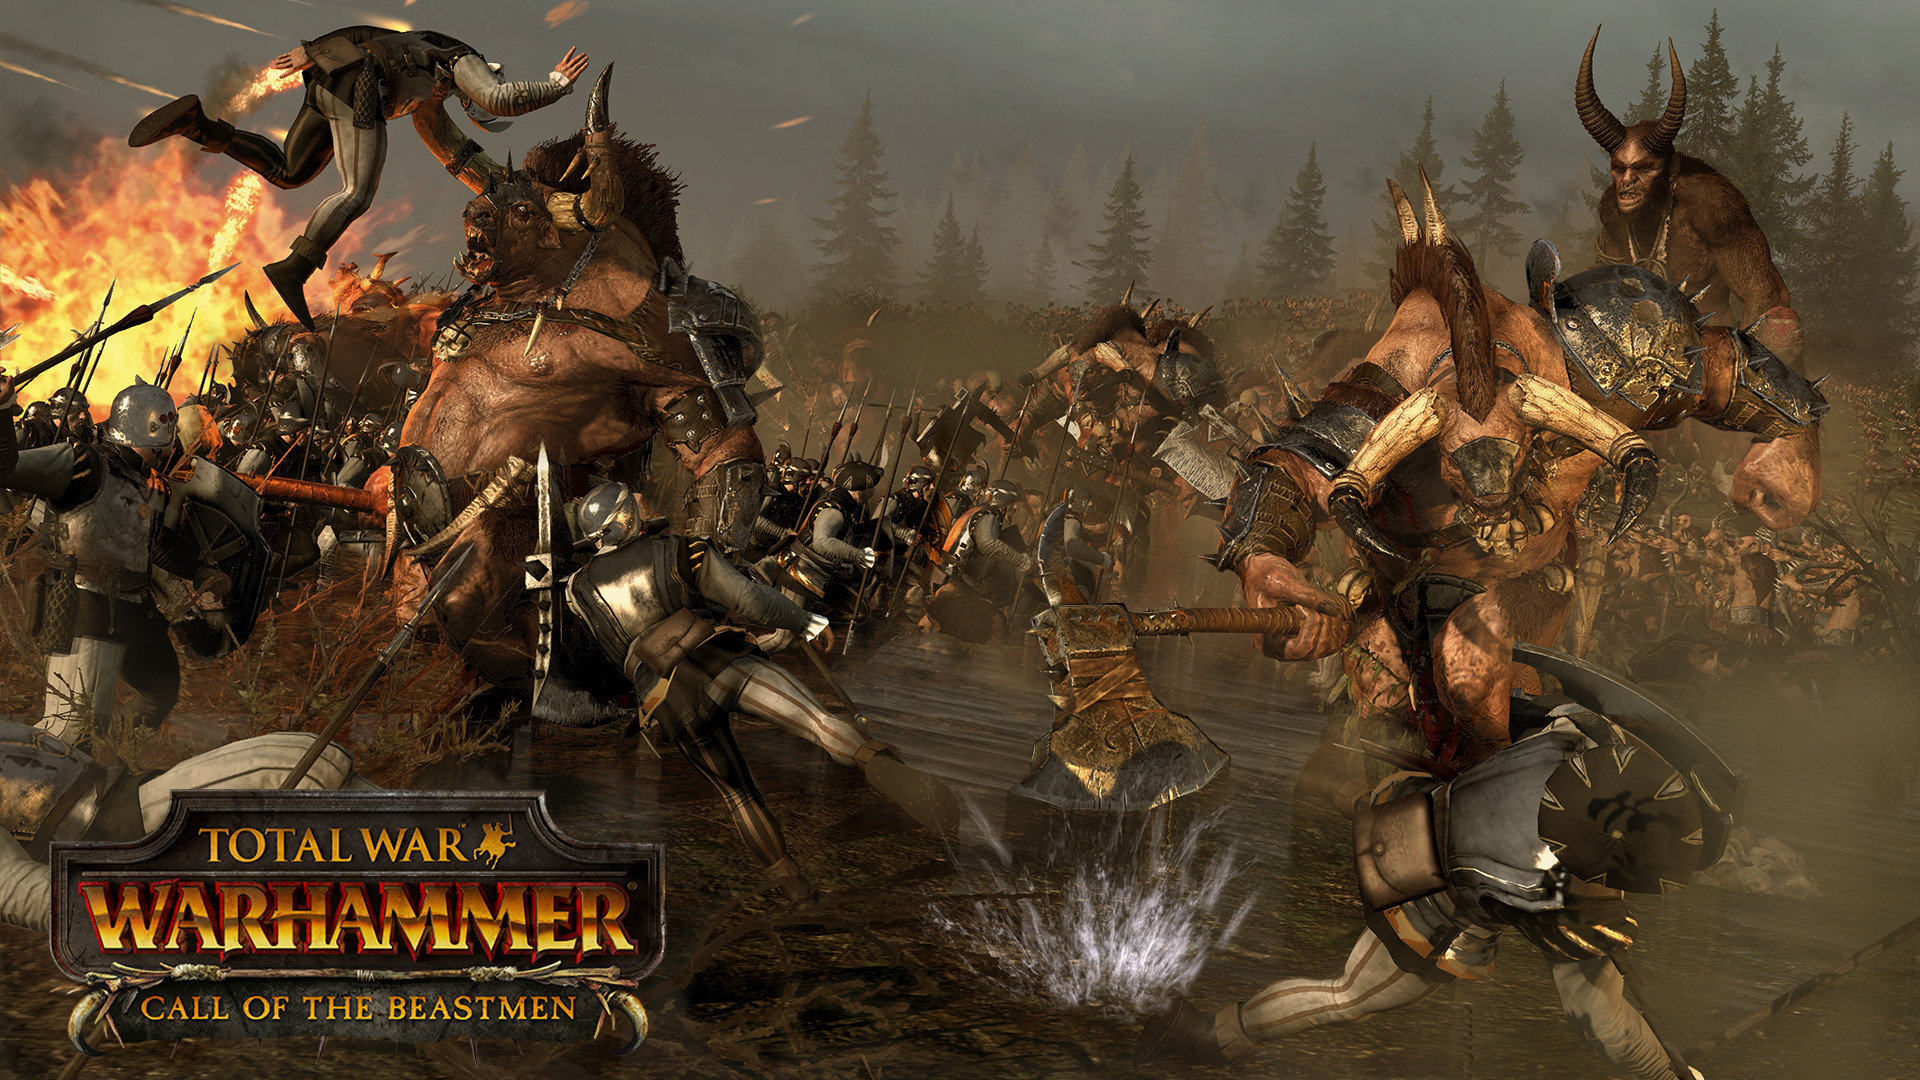 [$ 16.94] Total War: WARHAMMER II - Call of the Beastmen DLC Steam CD Key